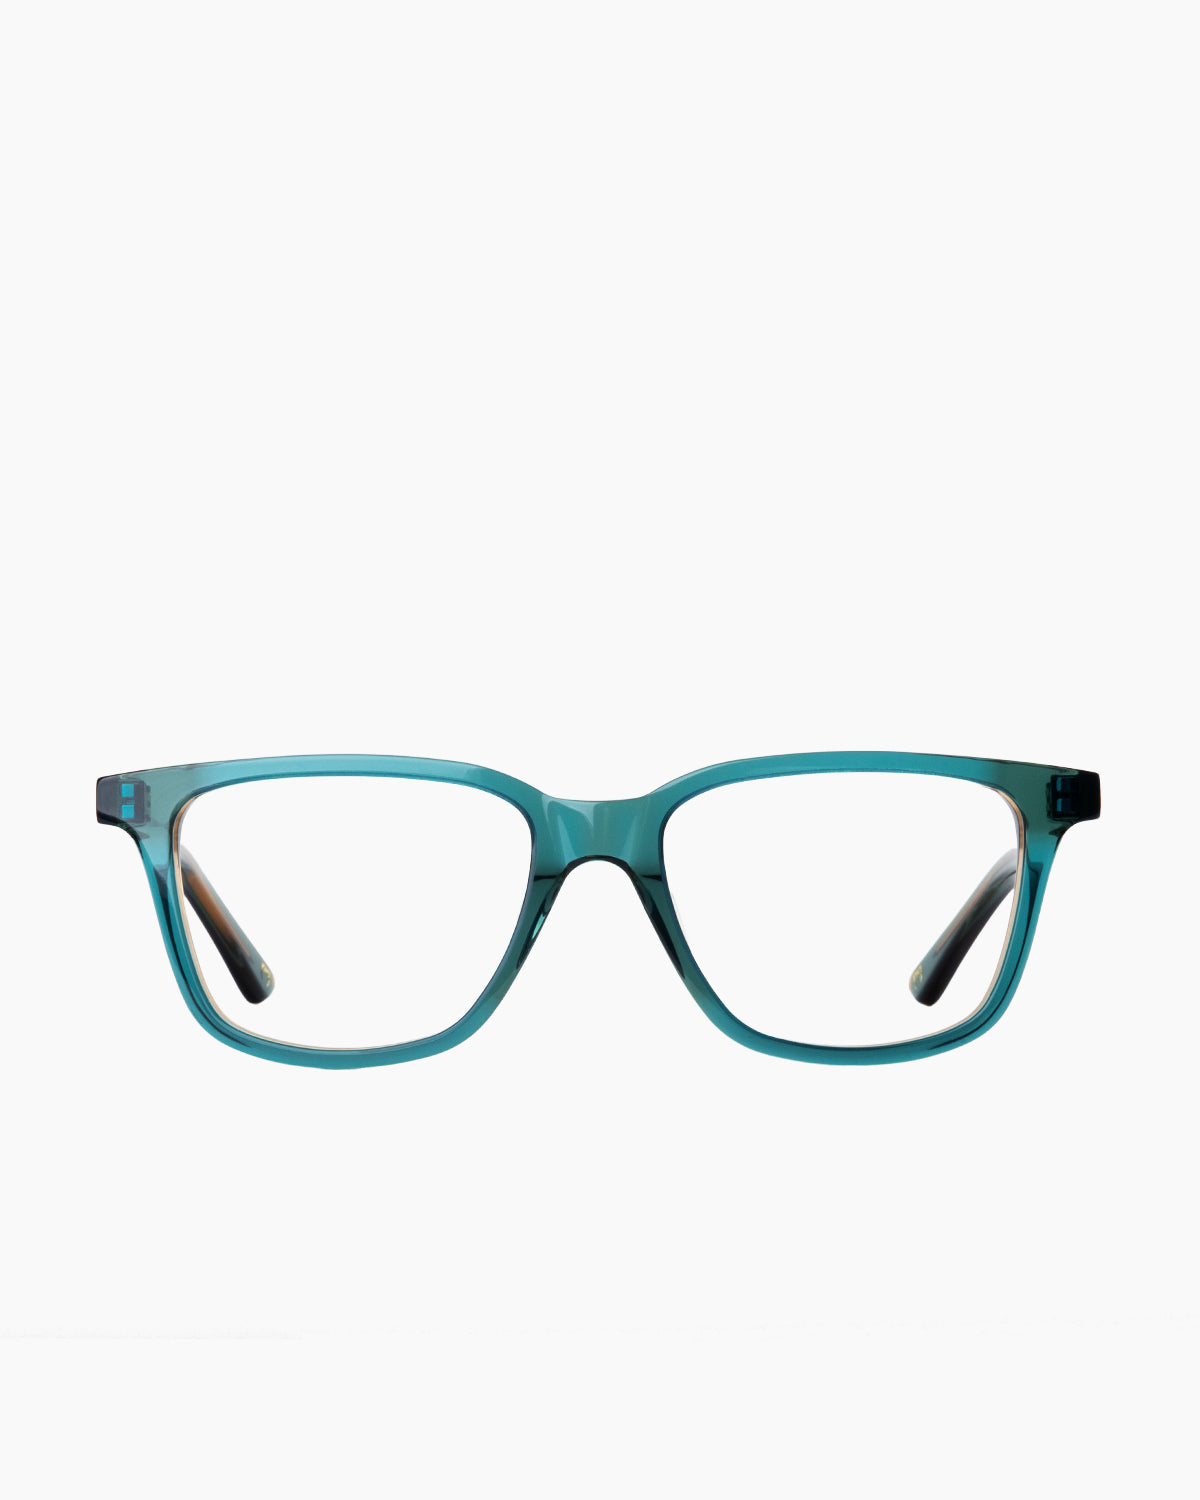 Spectacleeyeworks - Ilan - c736 | Bar à lunettes:  Marie-Sophie Dion